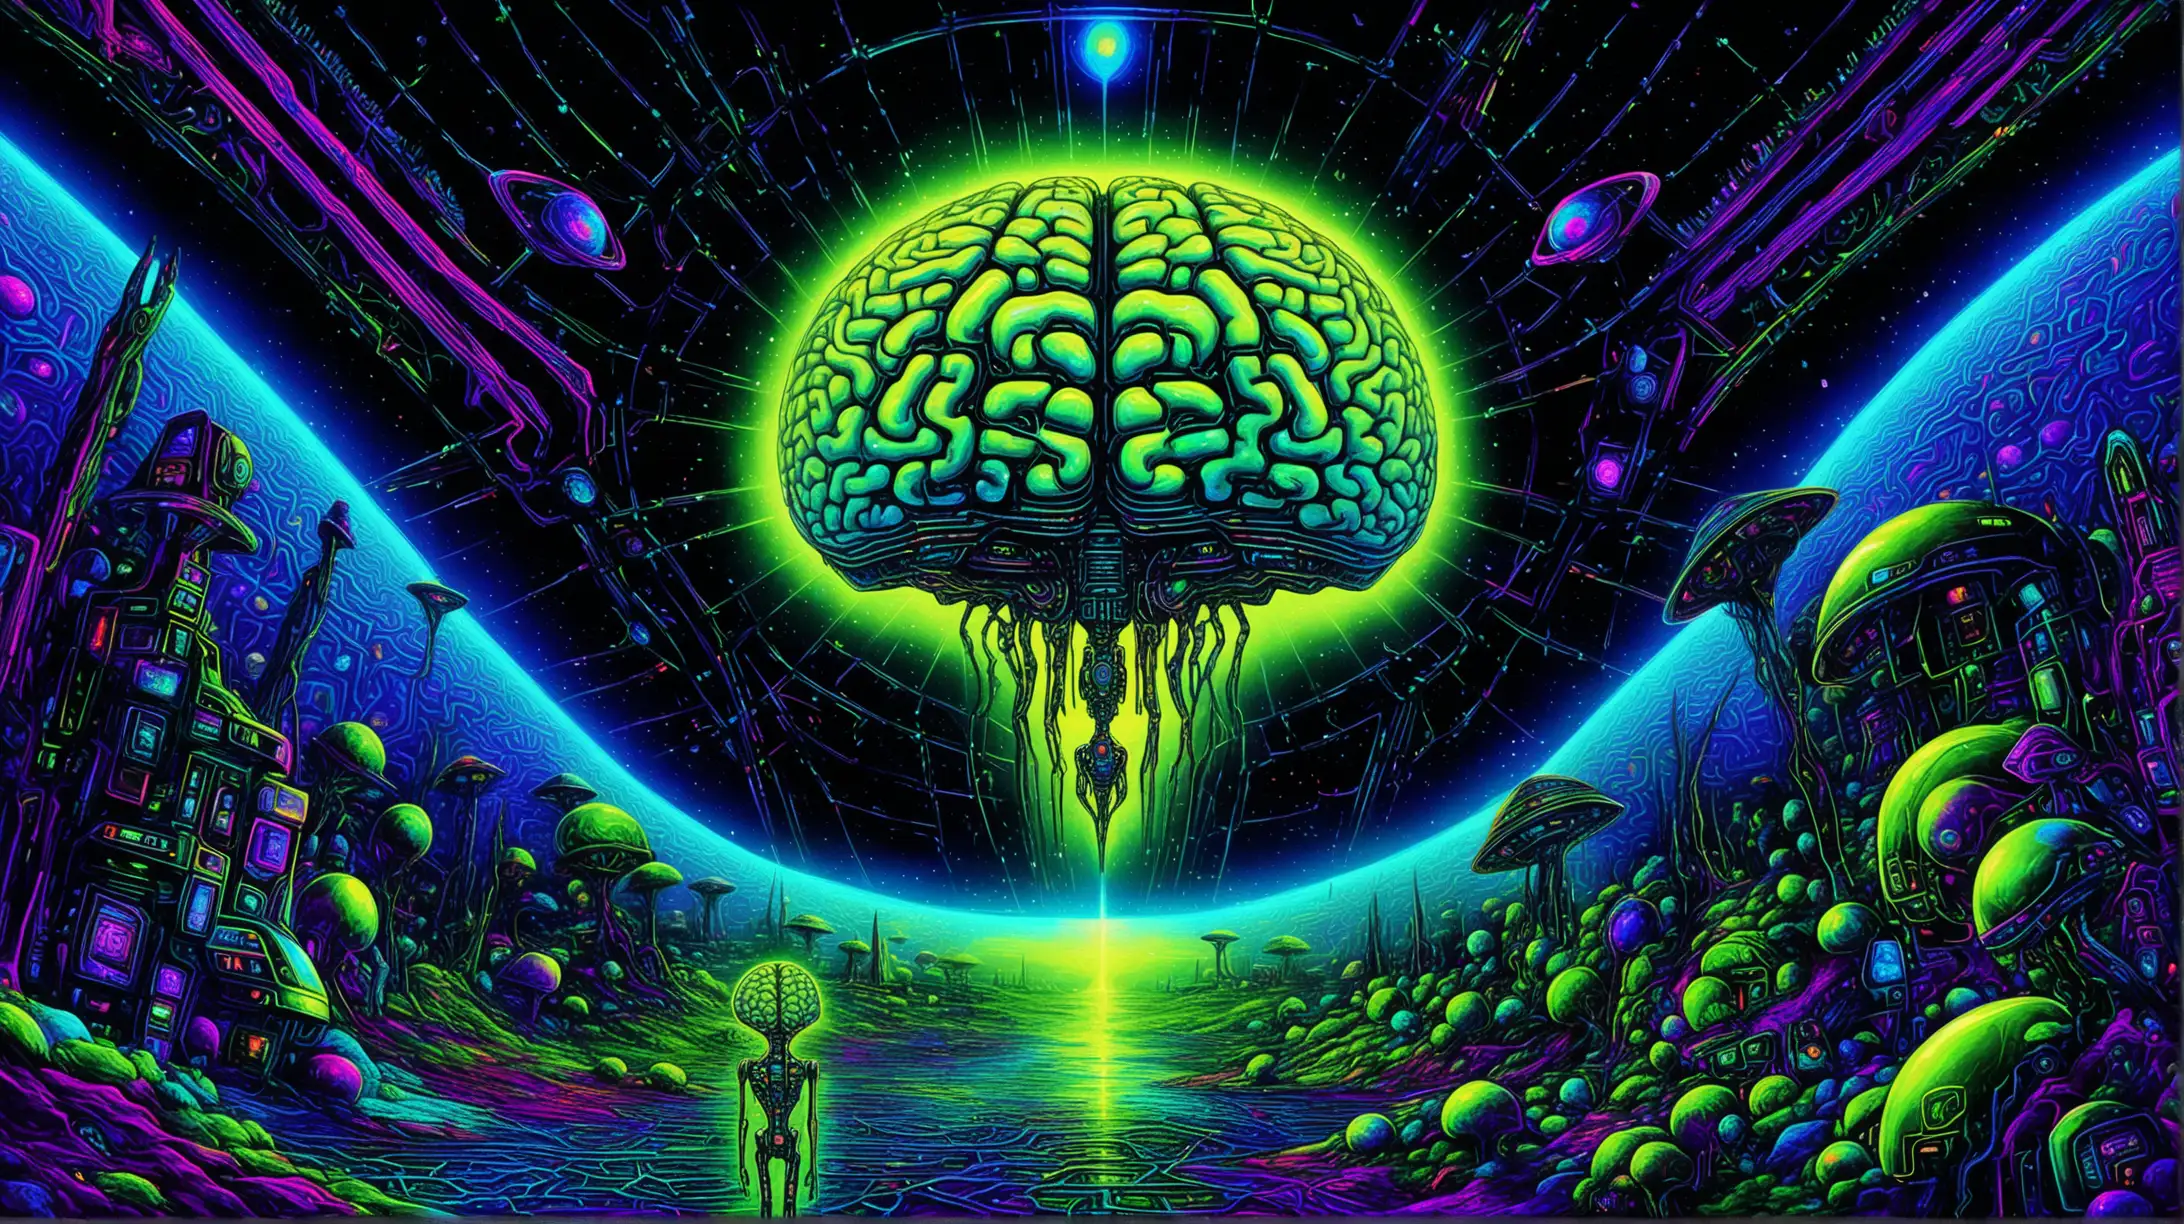 Surreal Futuristic Painting Alien Digital Brain in Cyber Neural Network Environment